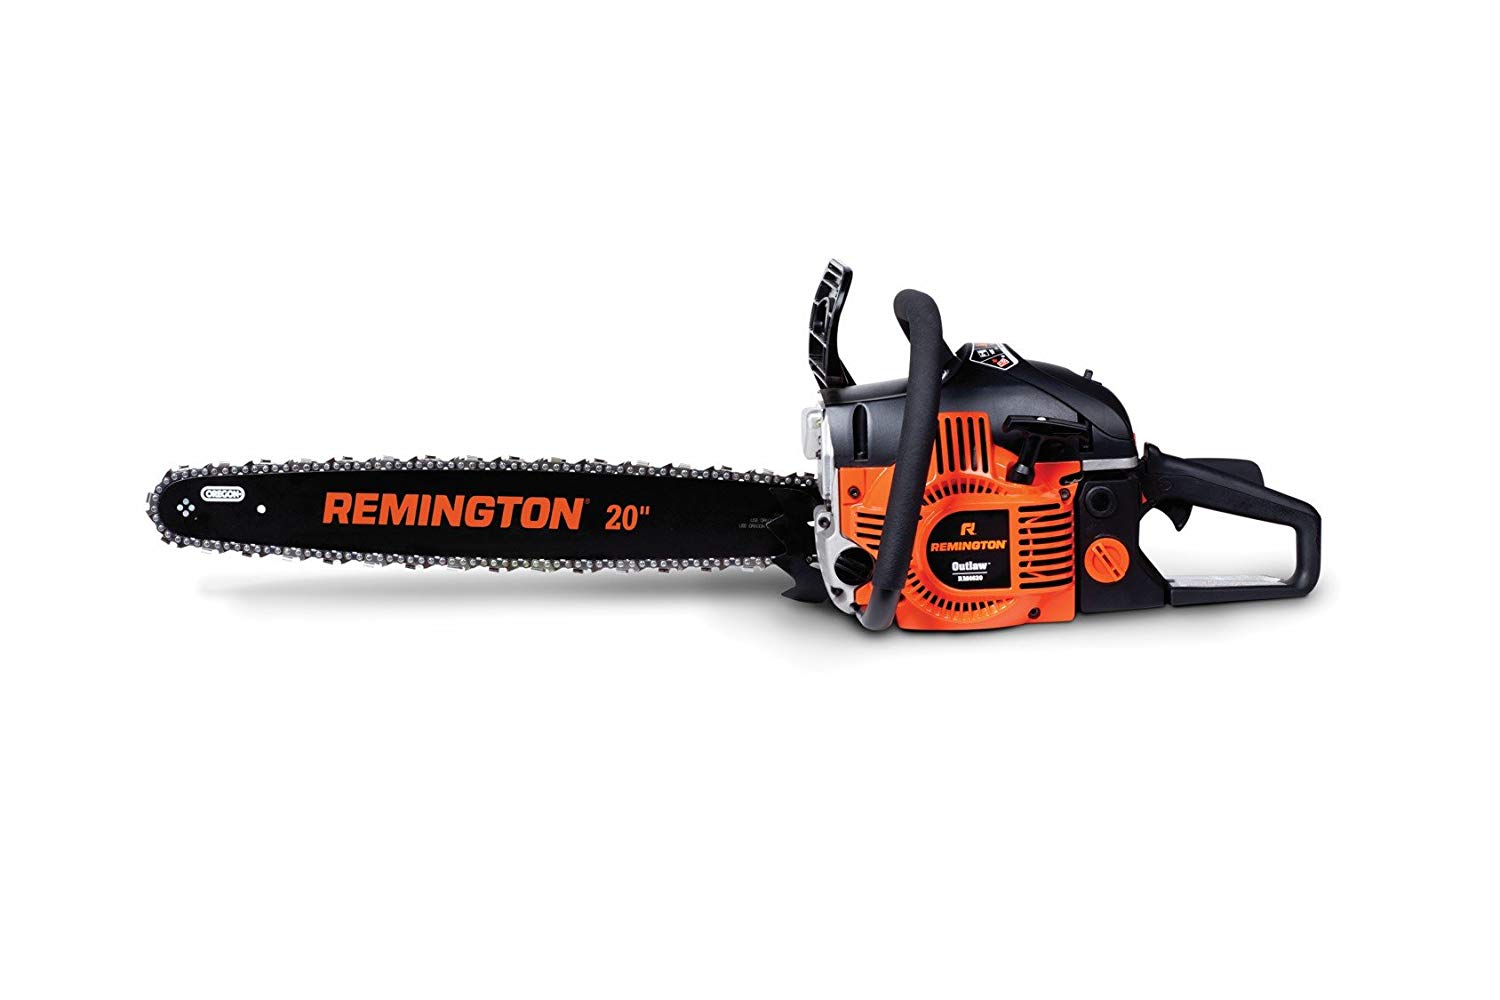 Who Makes Remington Chainsaws 